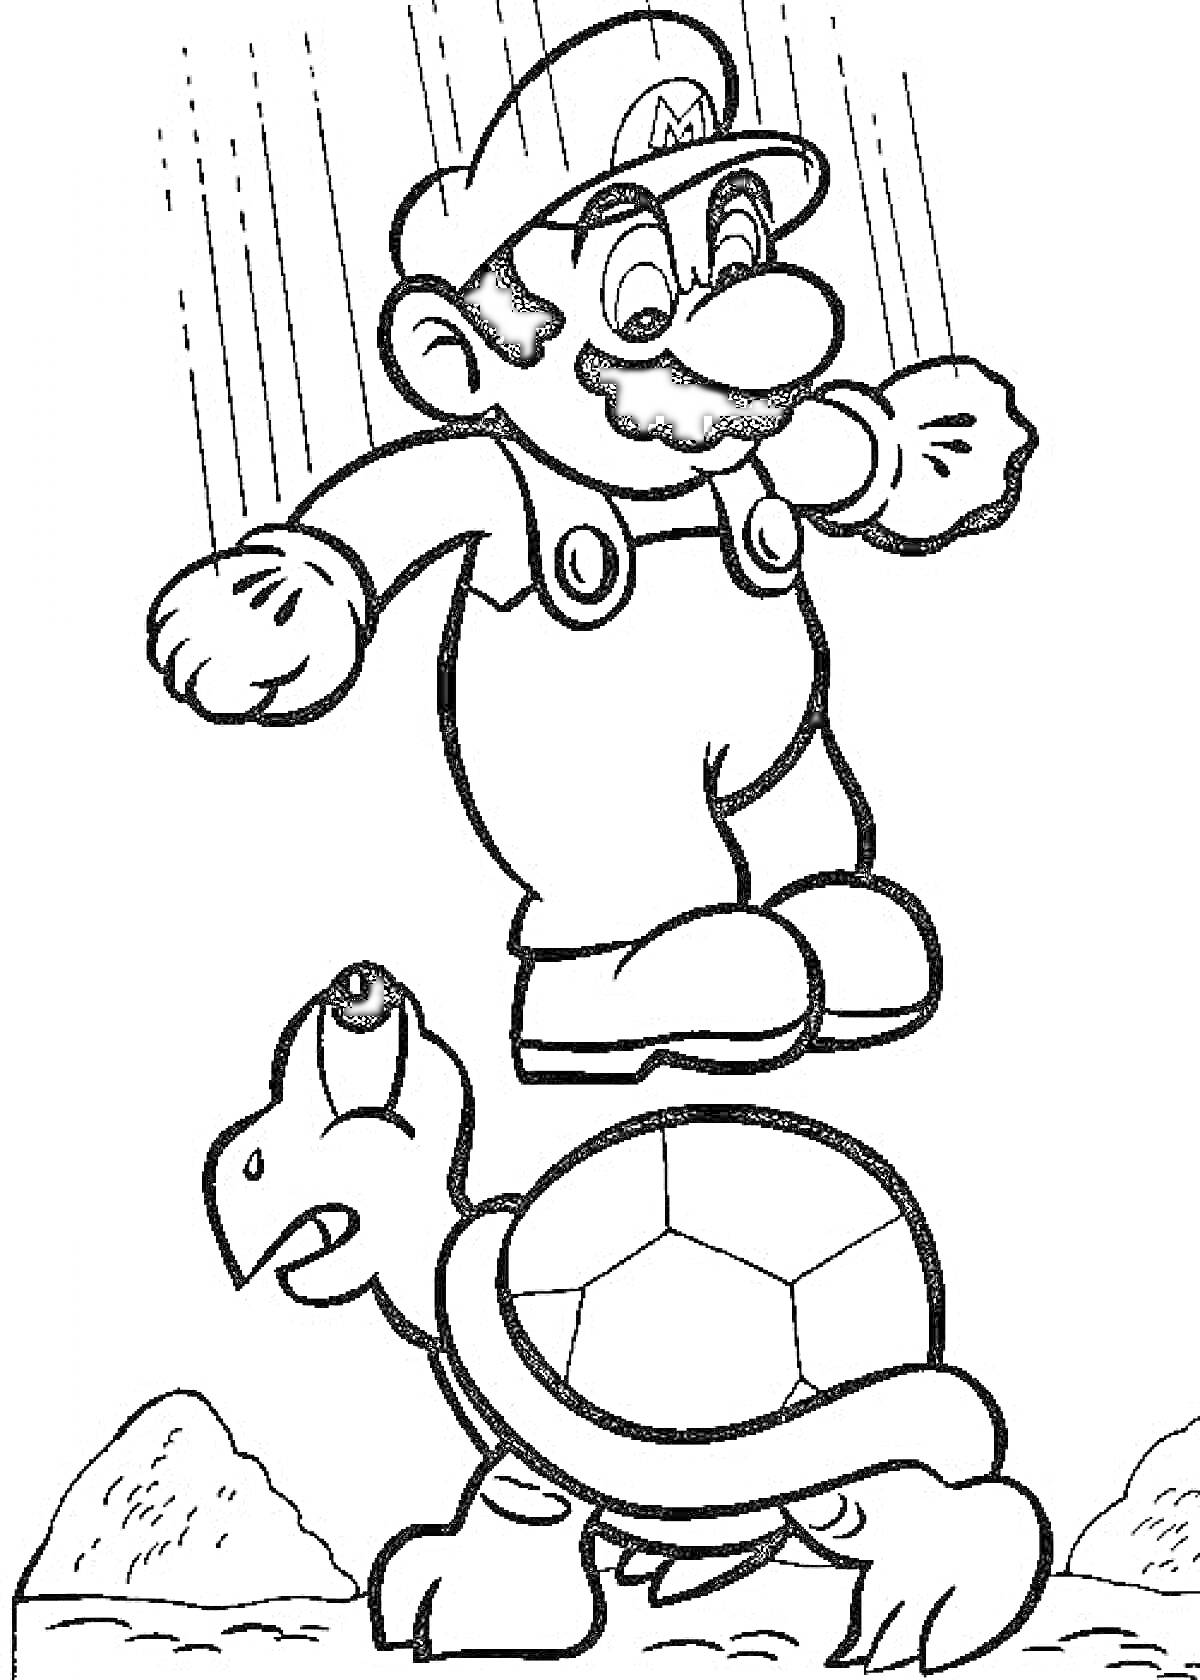 Марио прыгает на черепаху на фоне гор